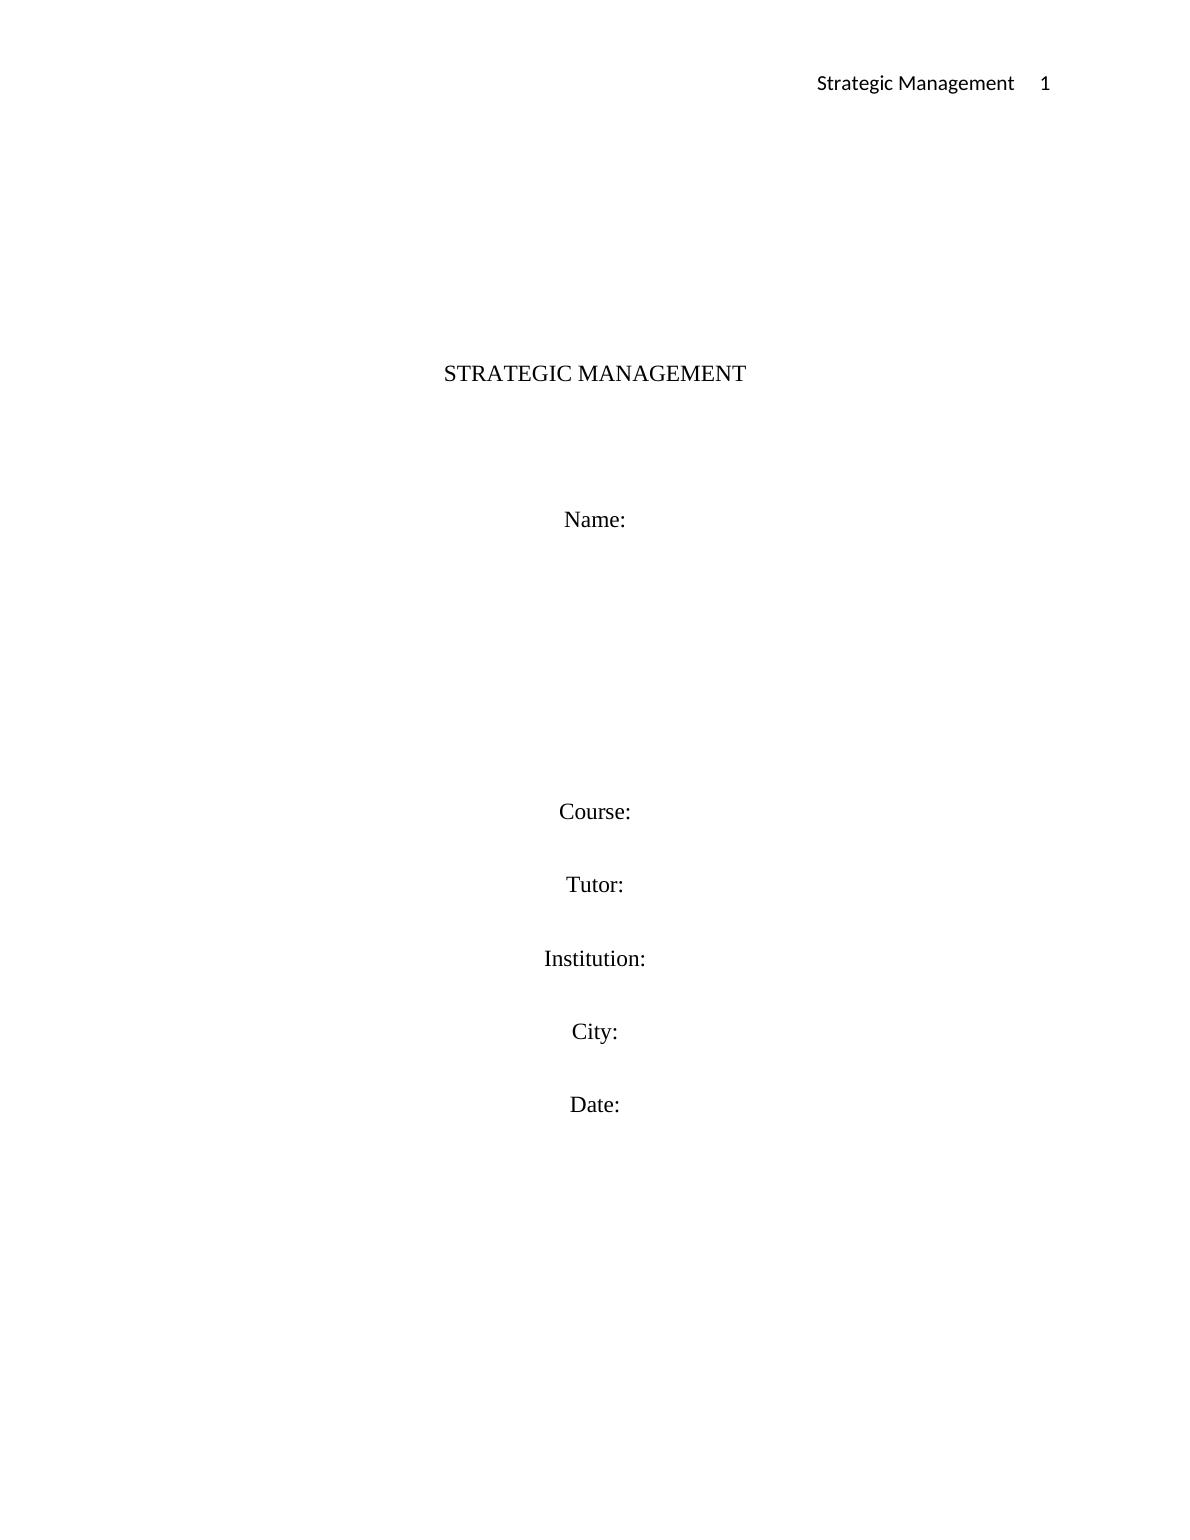 Strategic Management Strategy - Report_1